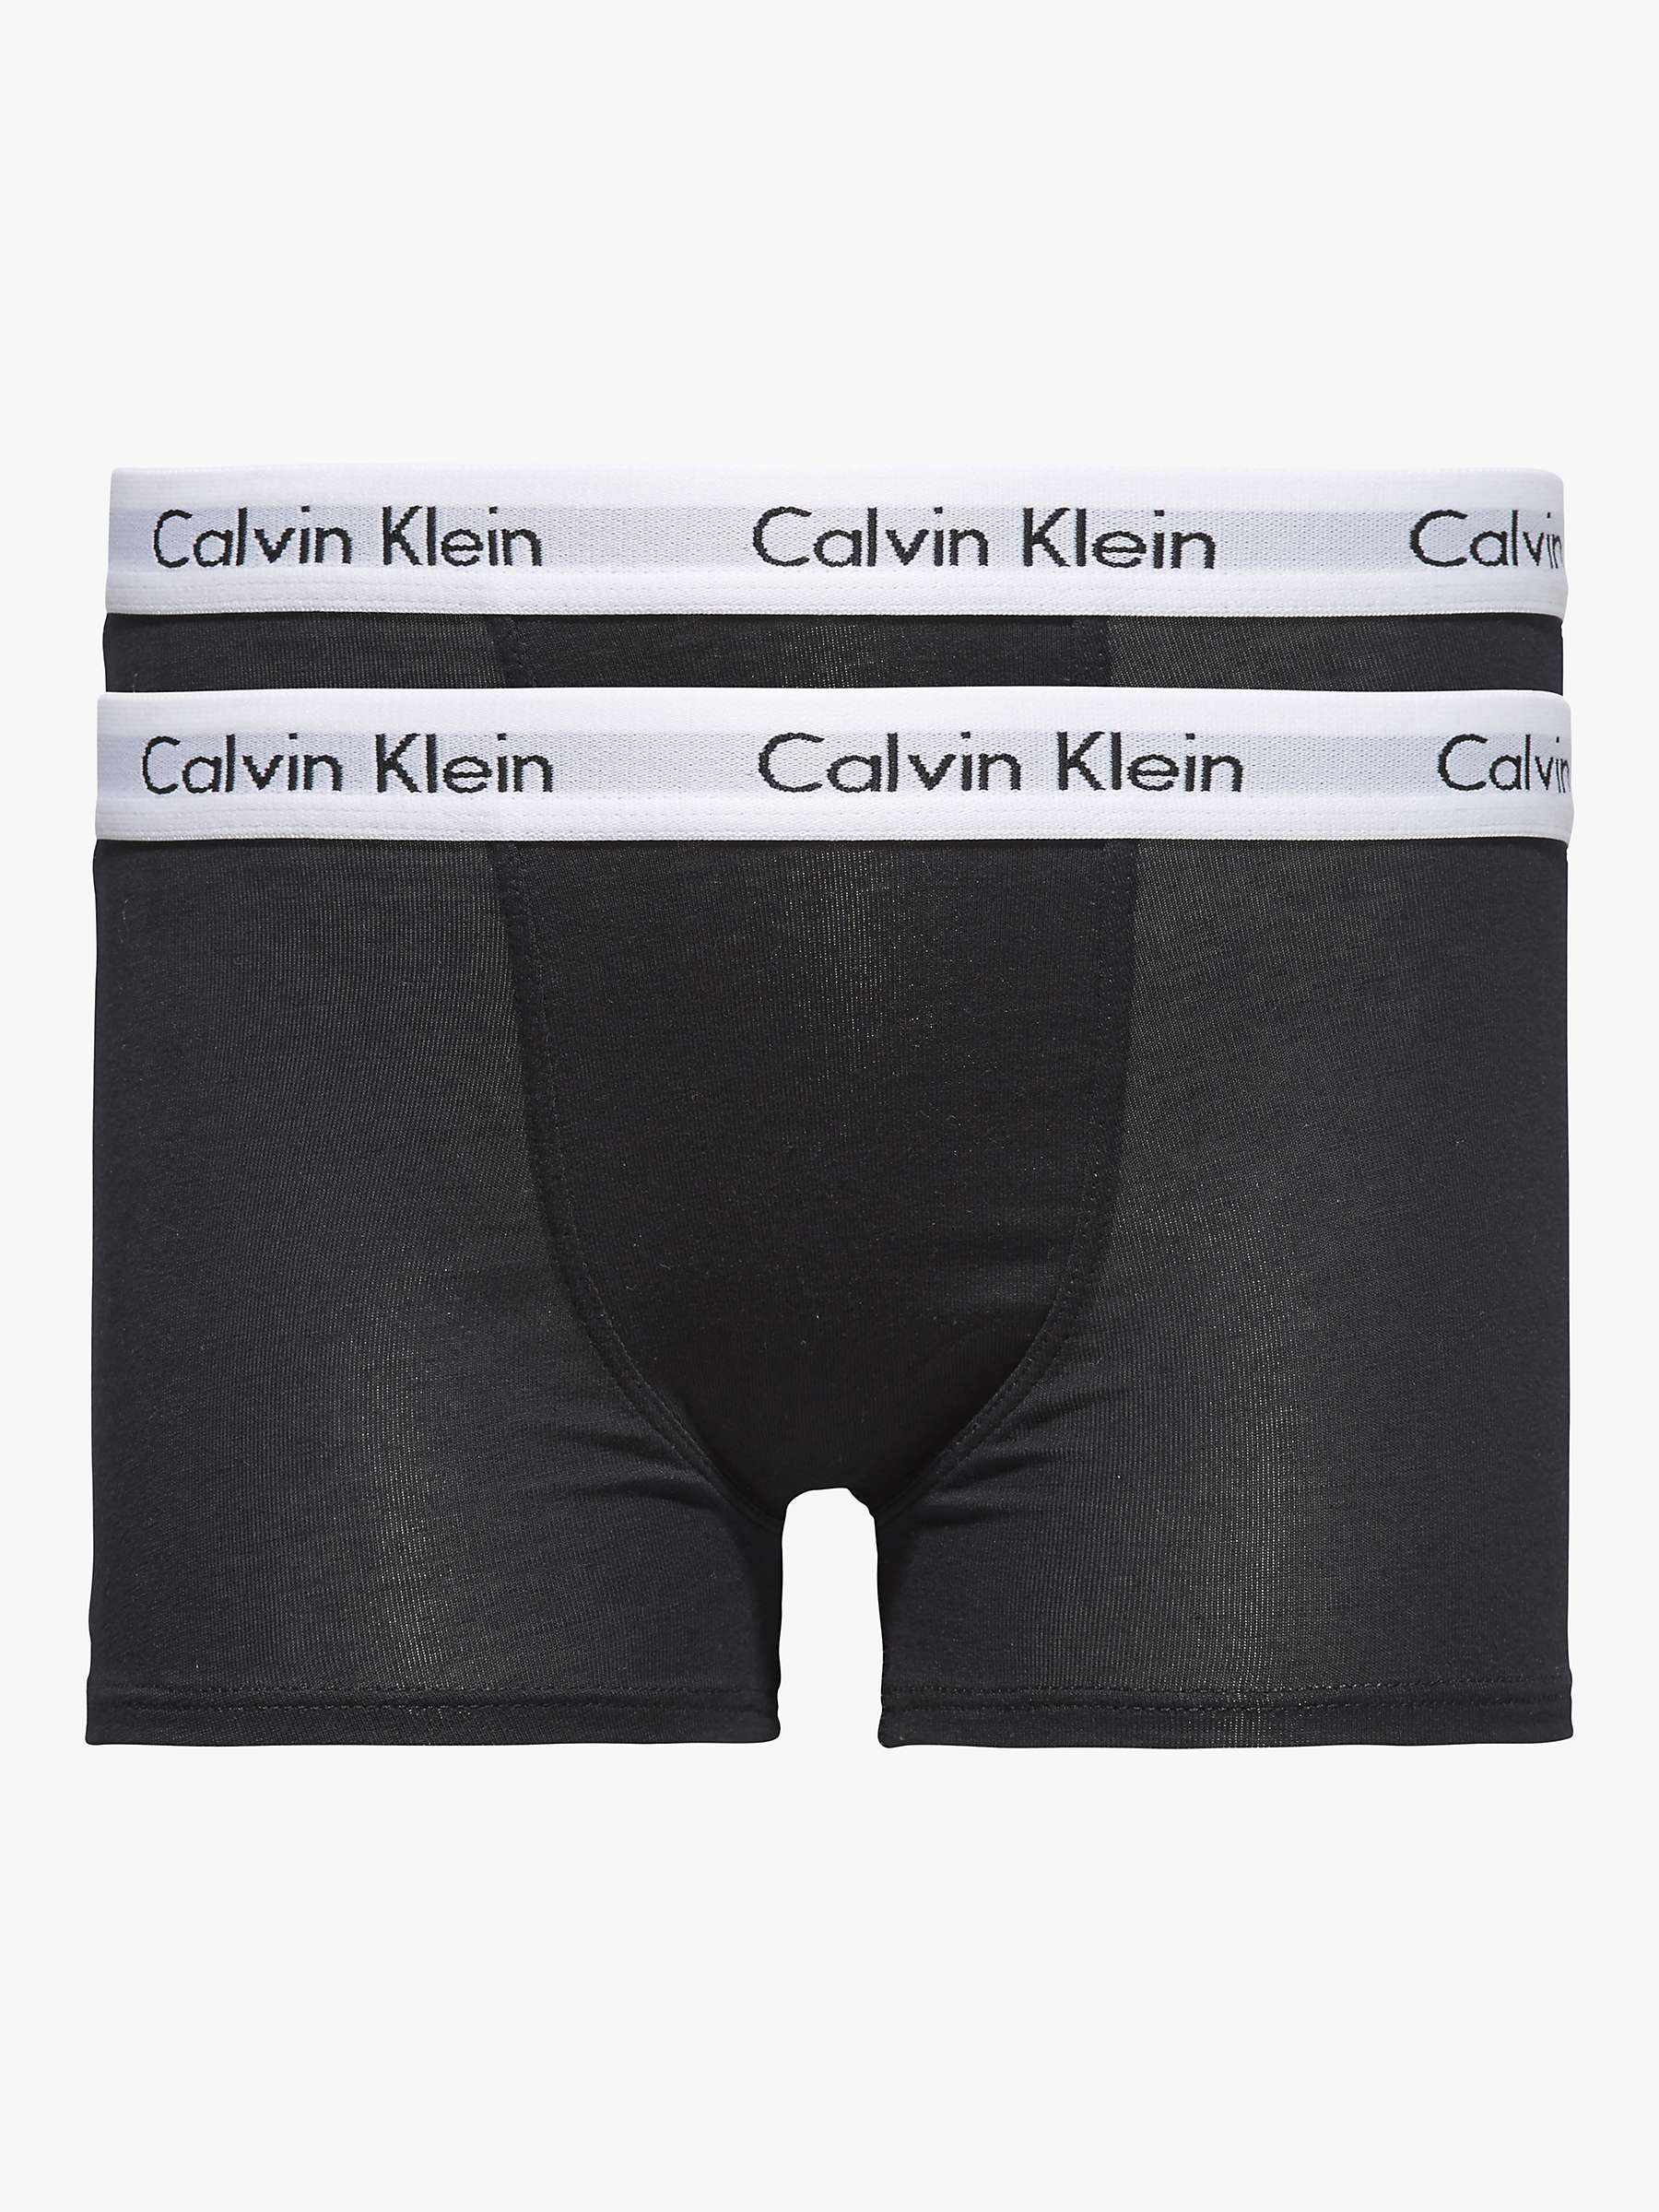 Buy Calvin Klein Kids' Trunks, Pack of 2, Black Online at johnlewis.com